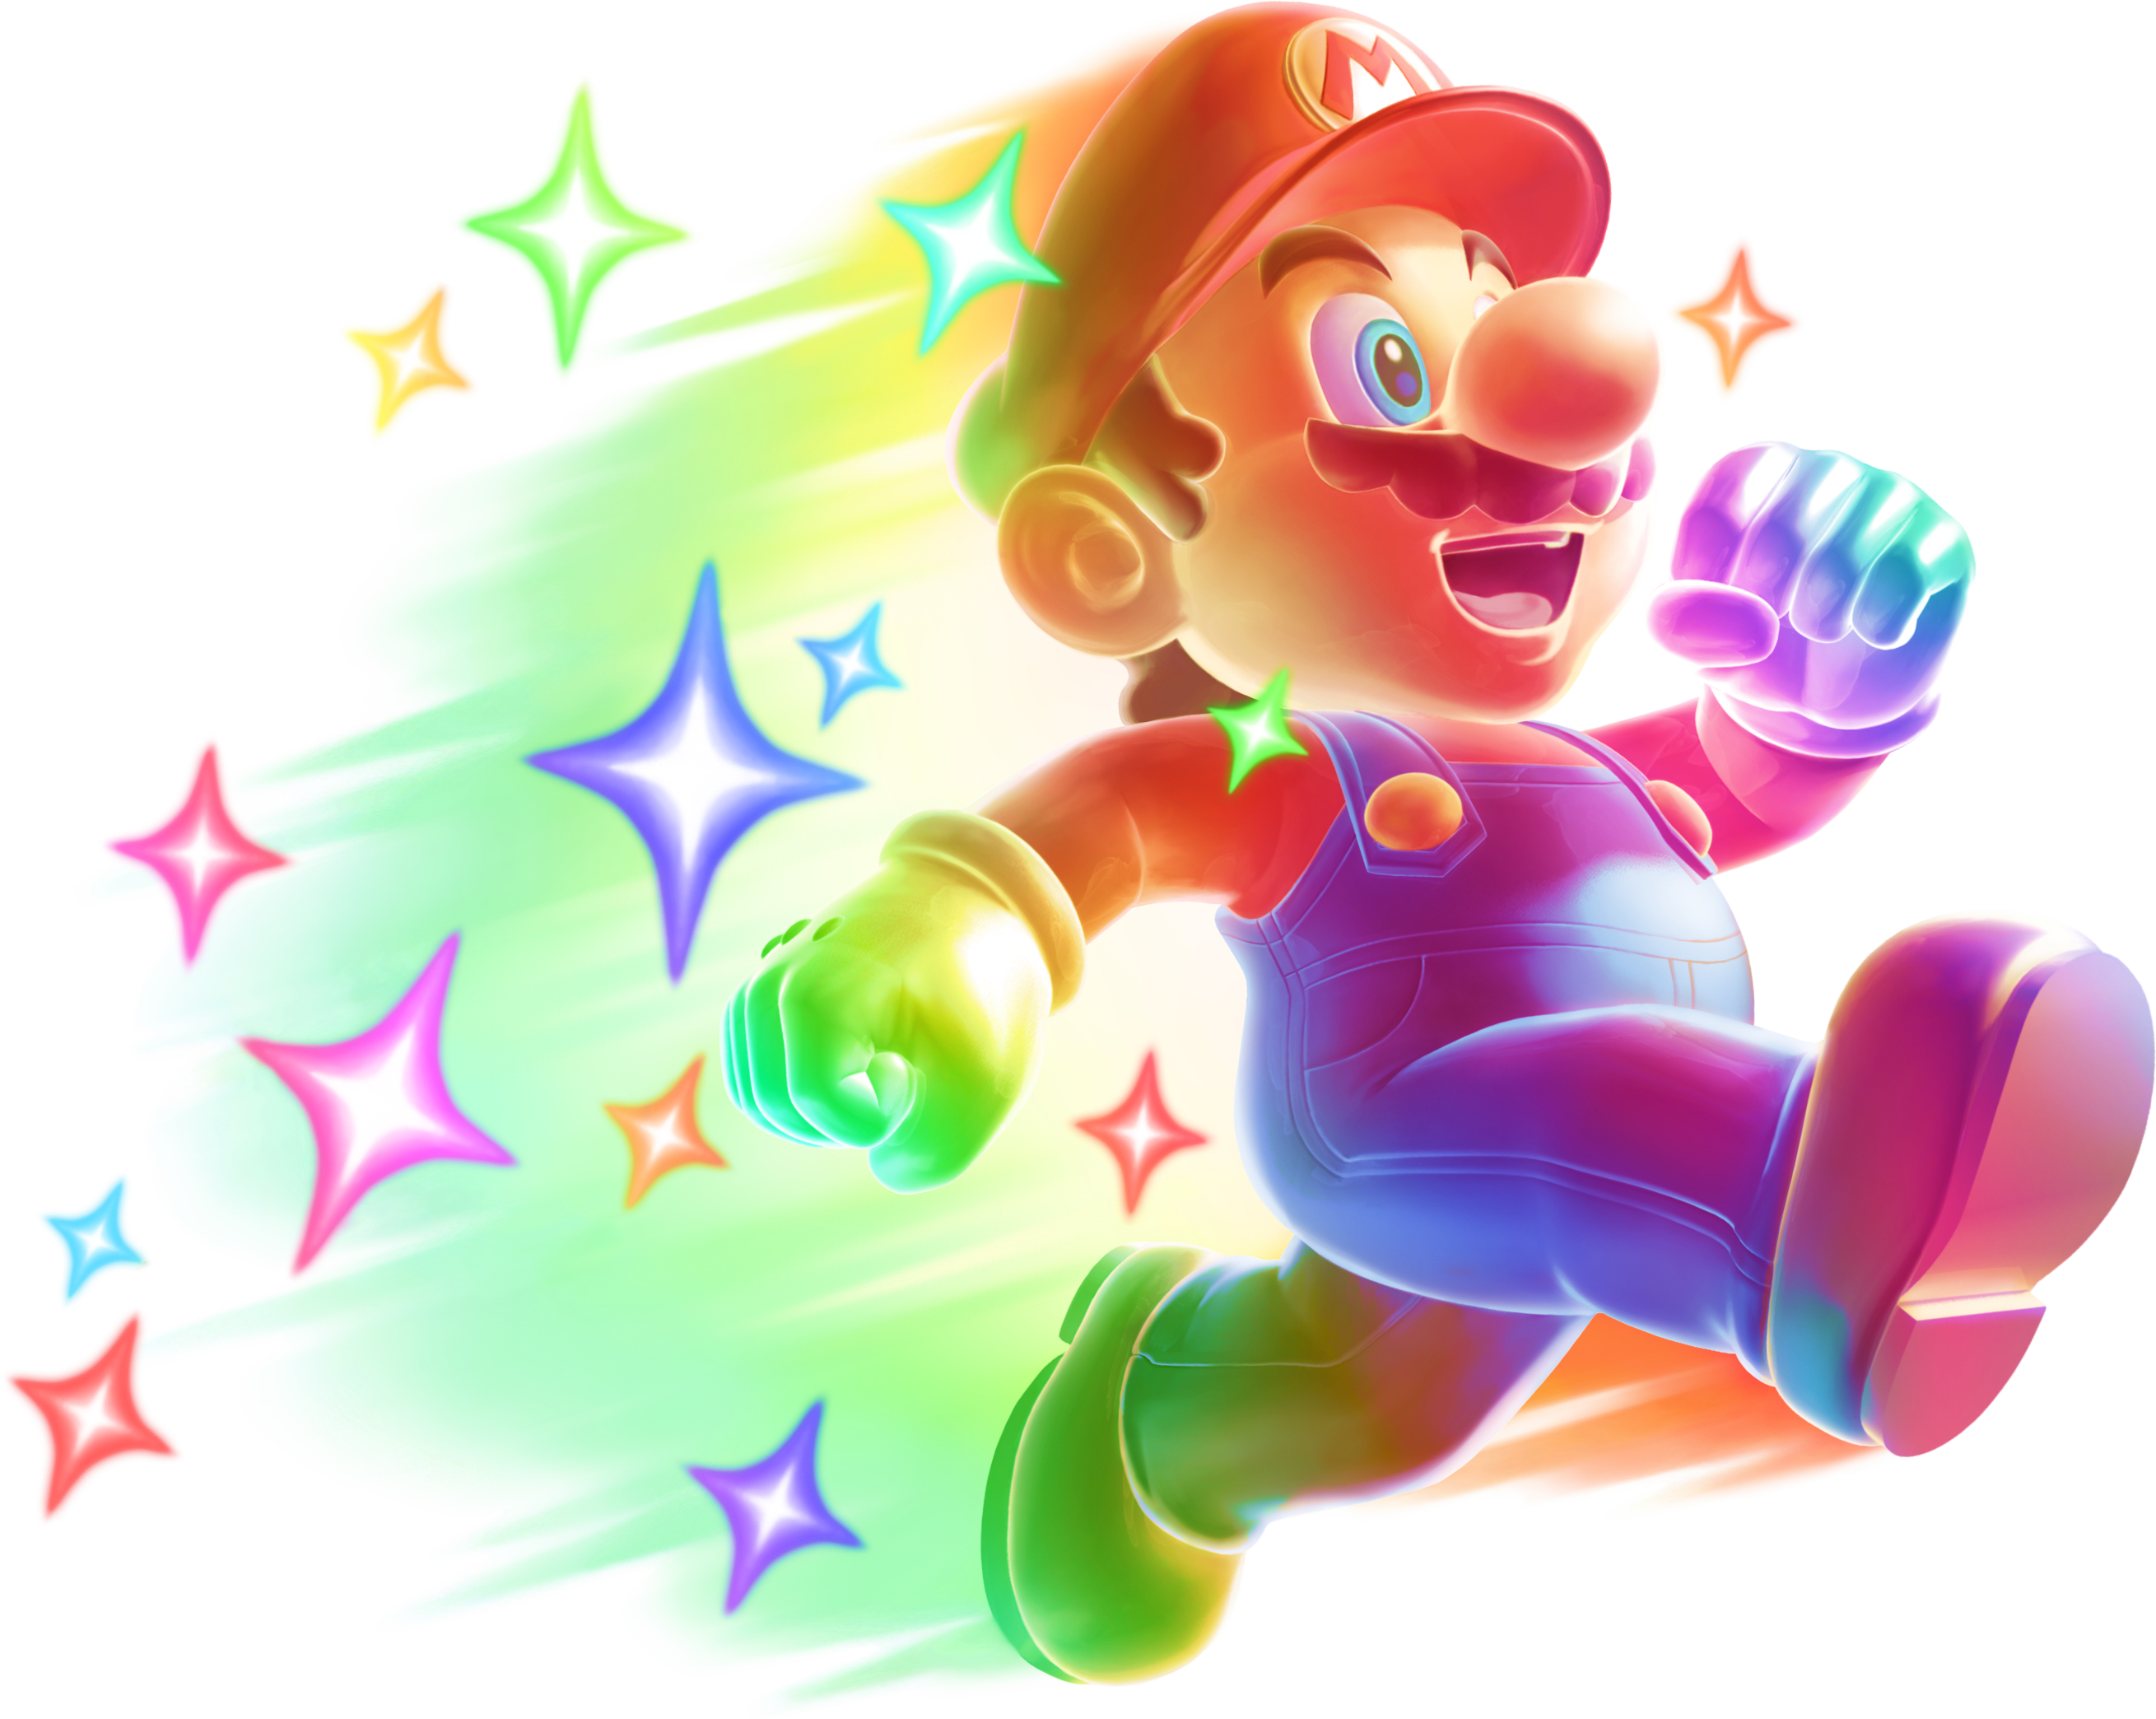 Power-ups - Super Mario Star Mario (2619x2088)